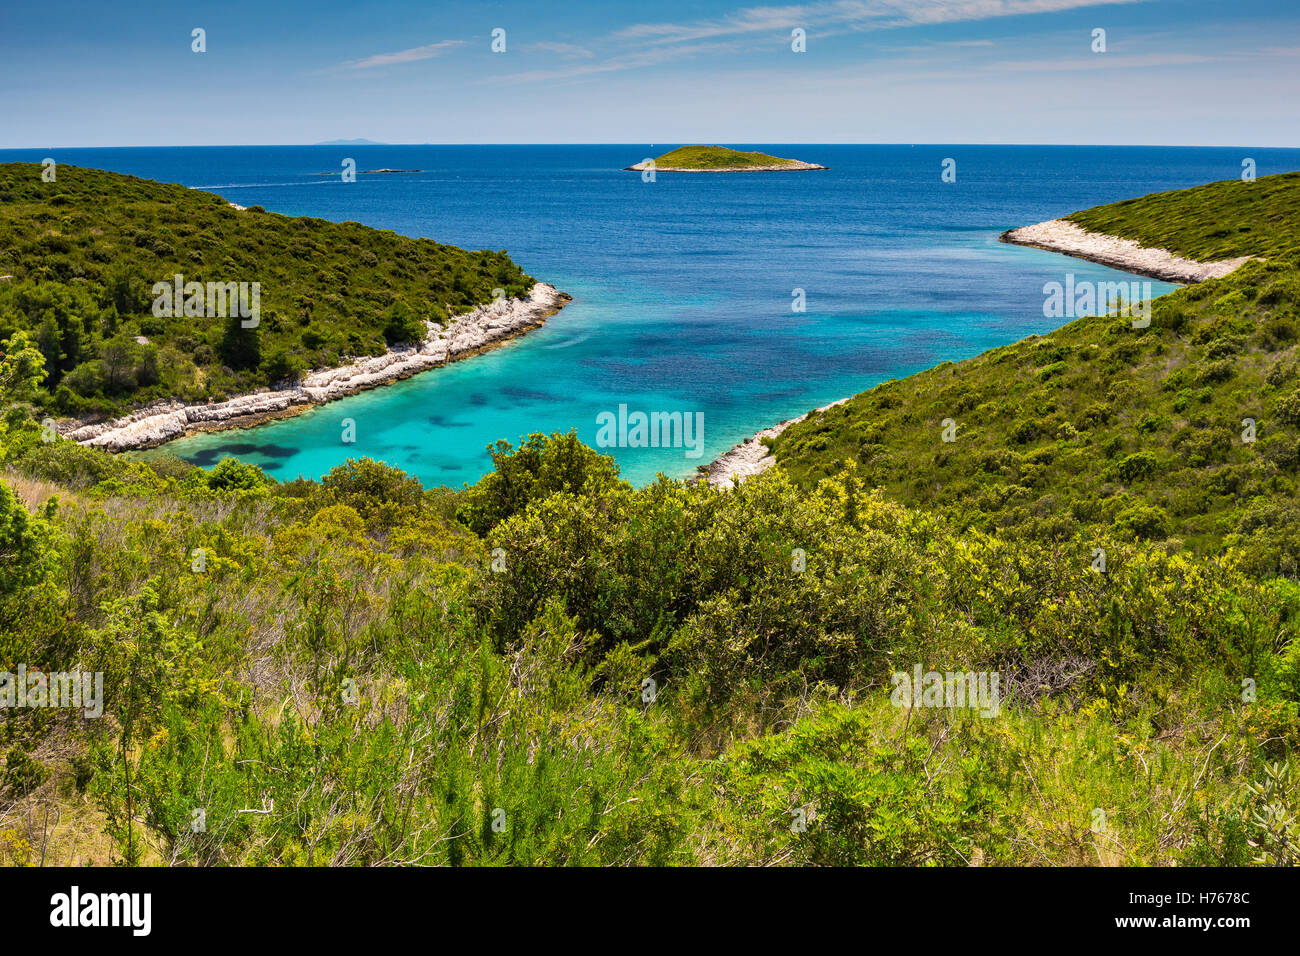 Pakleni islands. Paklinski otoci. Bay and Mediterranean vegetation. Adriatic sea. Croatia. Europe. Stock Photo